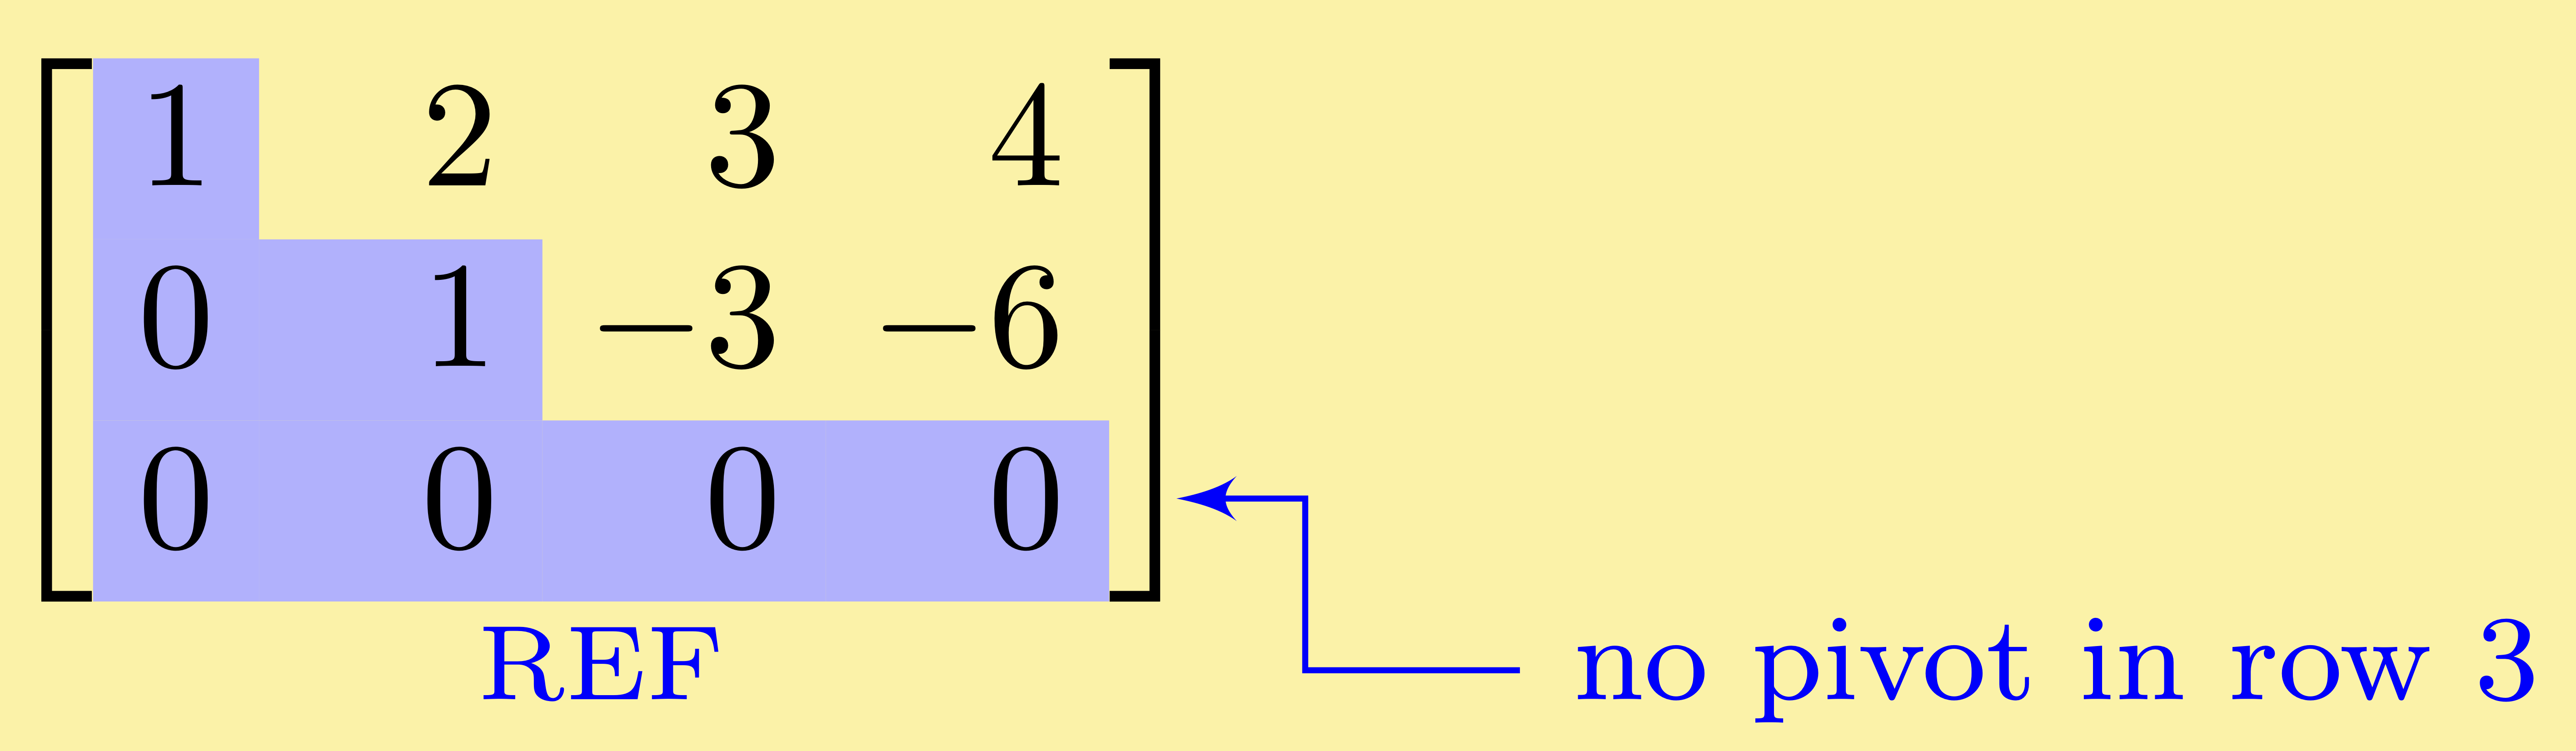 linear algebra matrix in row echelon form missing a pivot